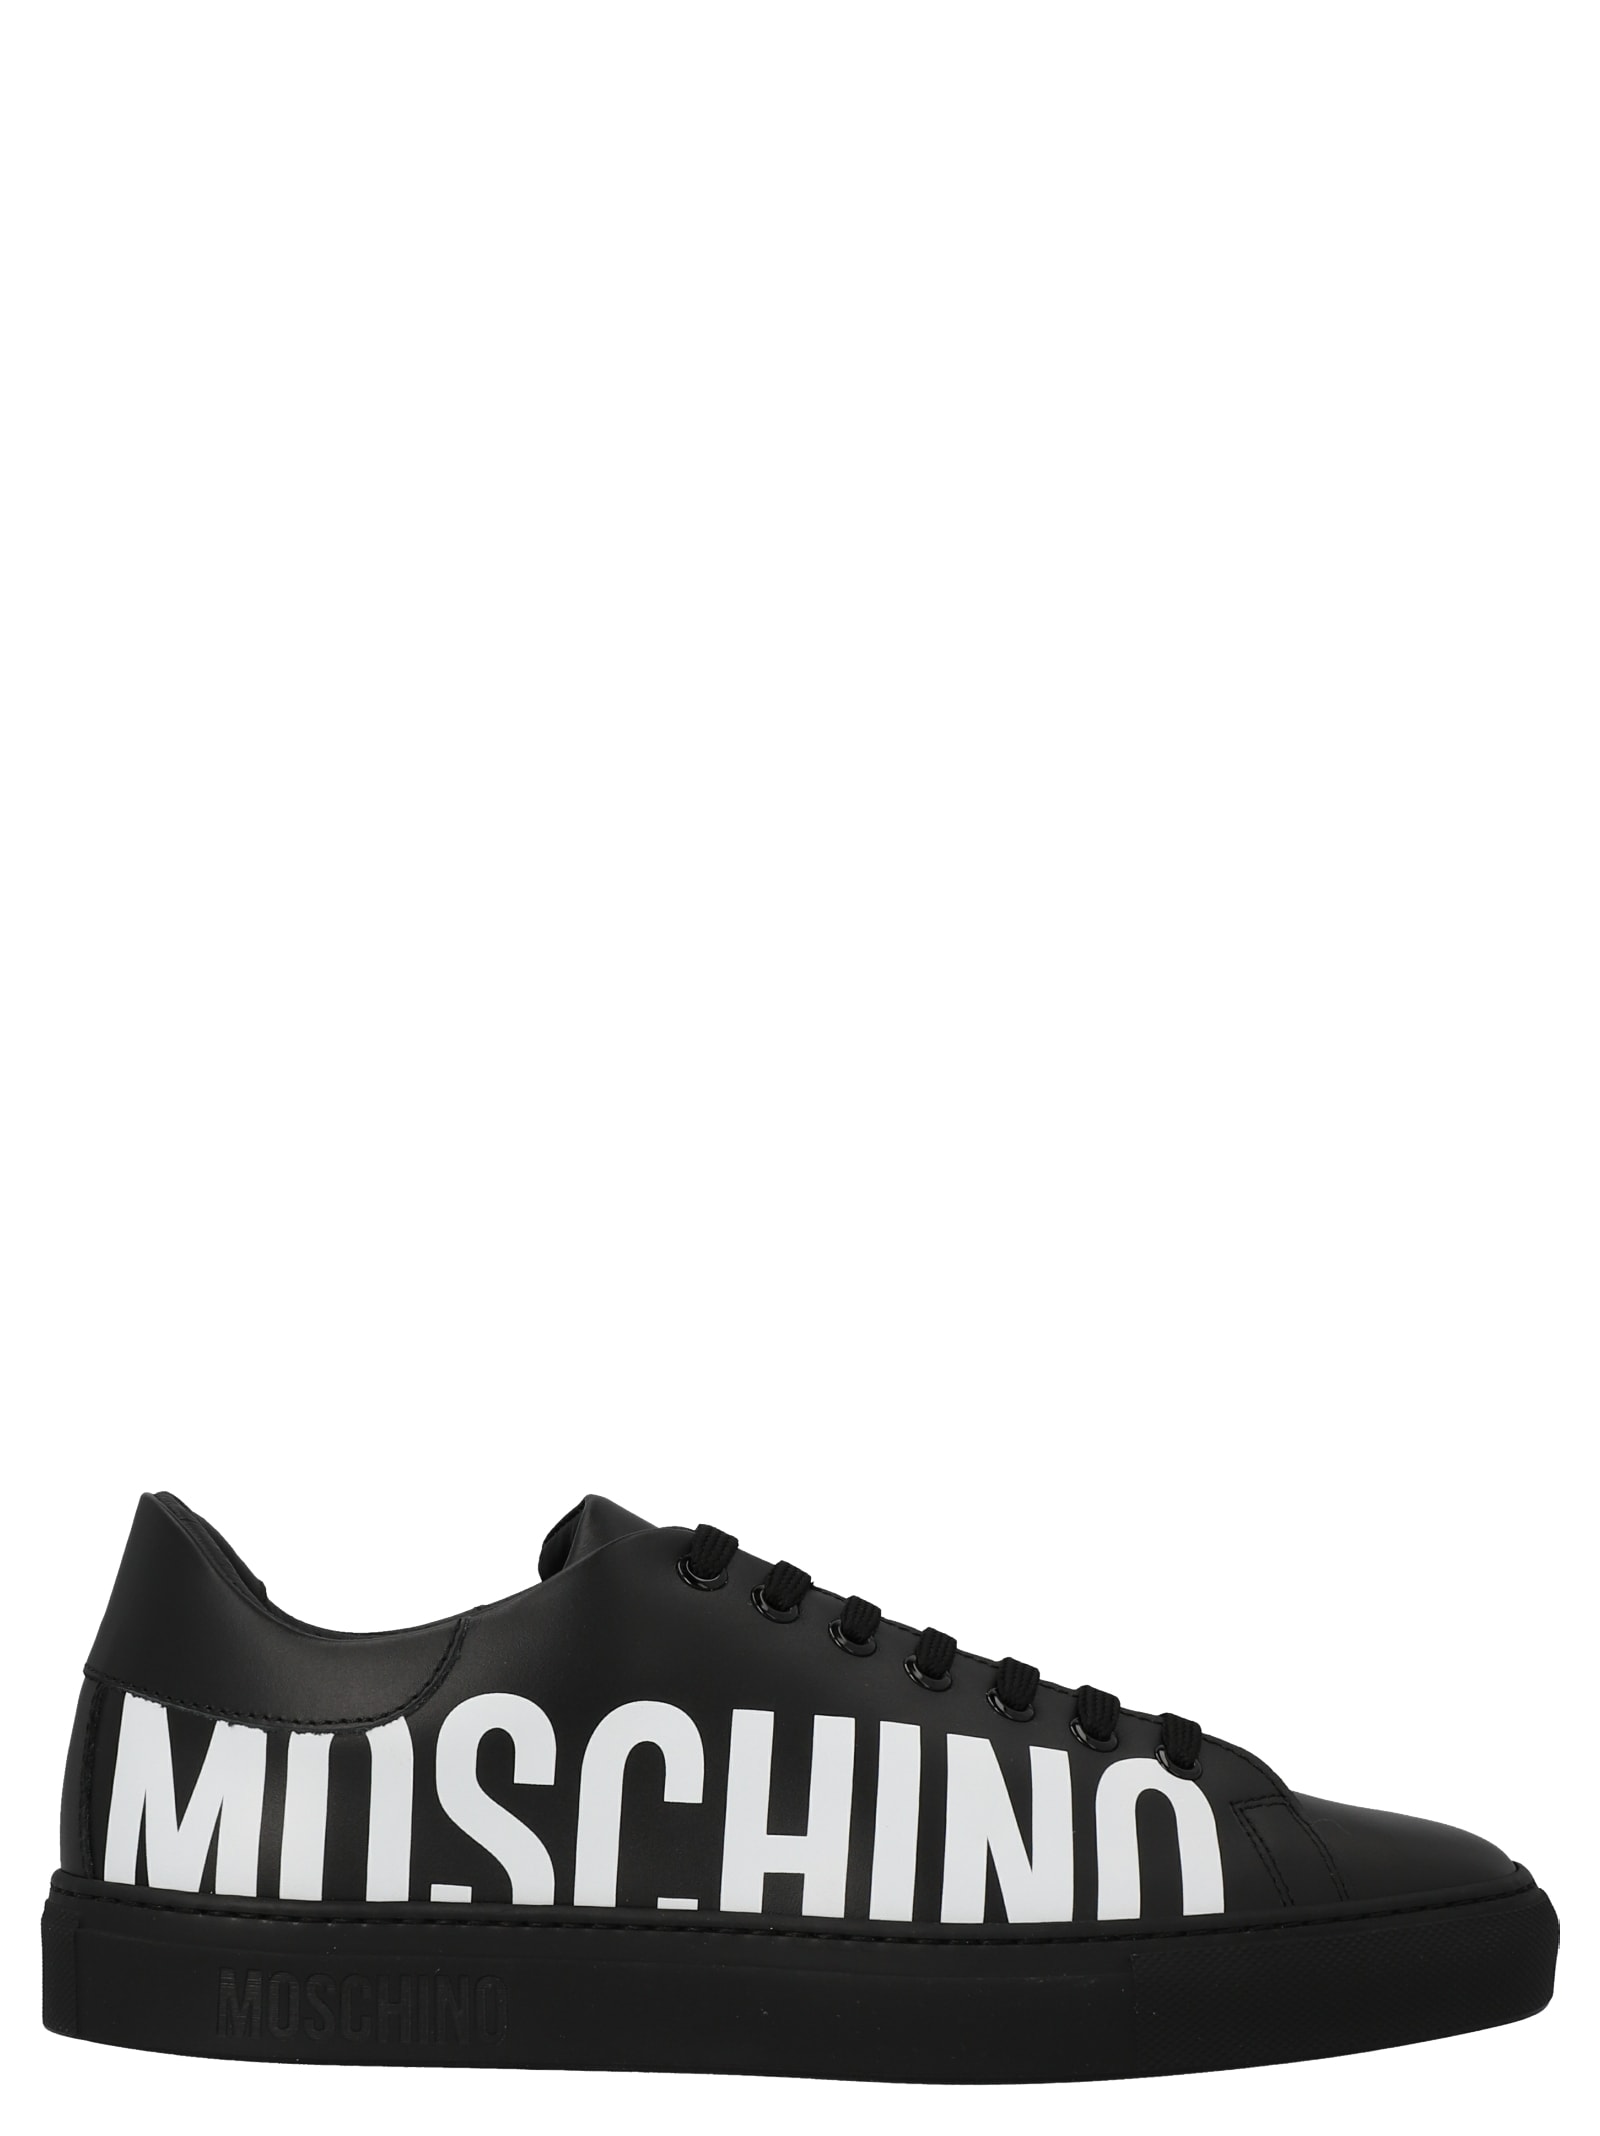 Moschino Black Leather Logo Sneakers | ModeSens